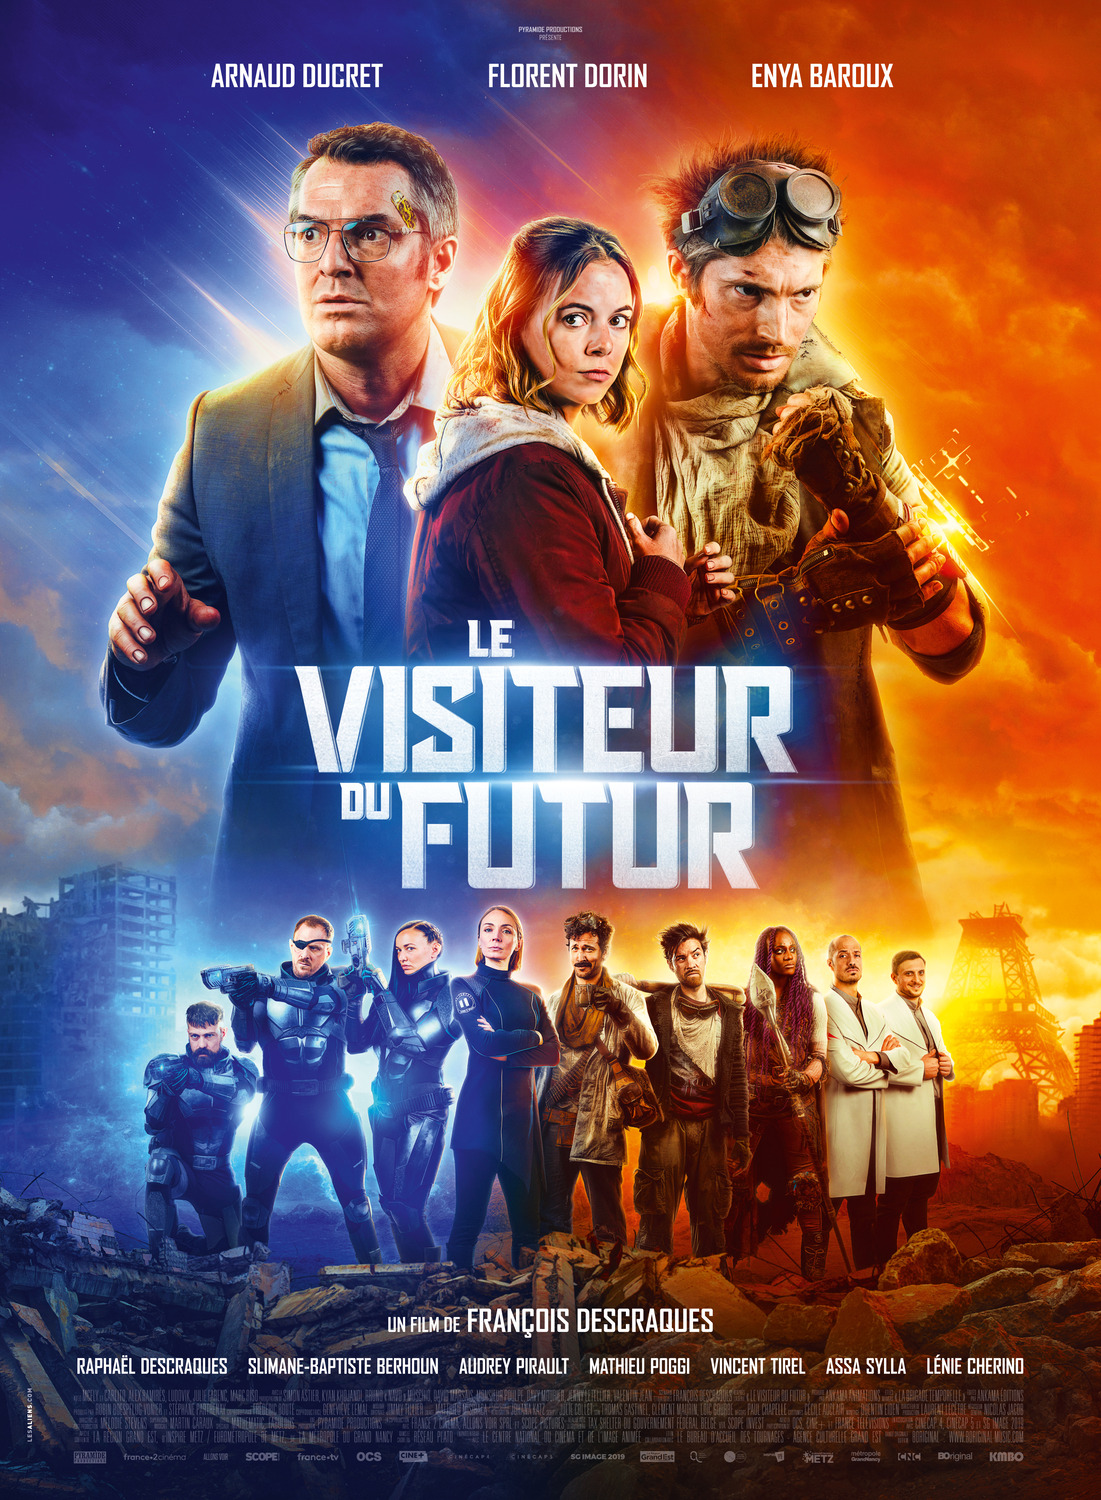 Extra Large Movie Poster Image for Le visiteur du futur (#2 of 2)